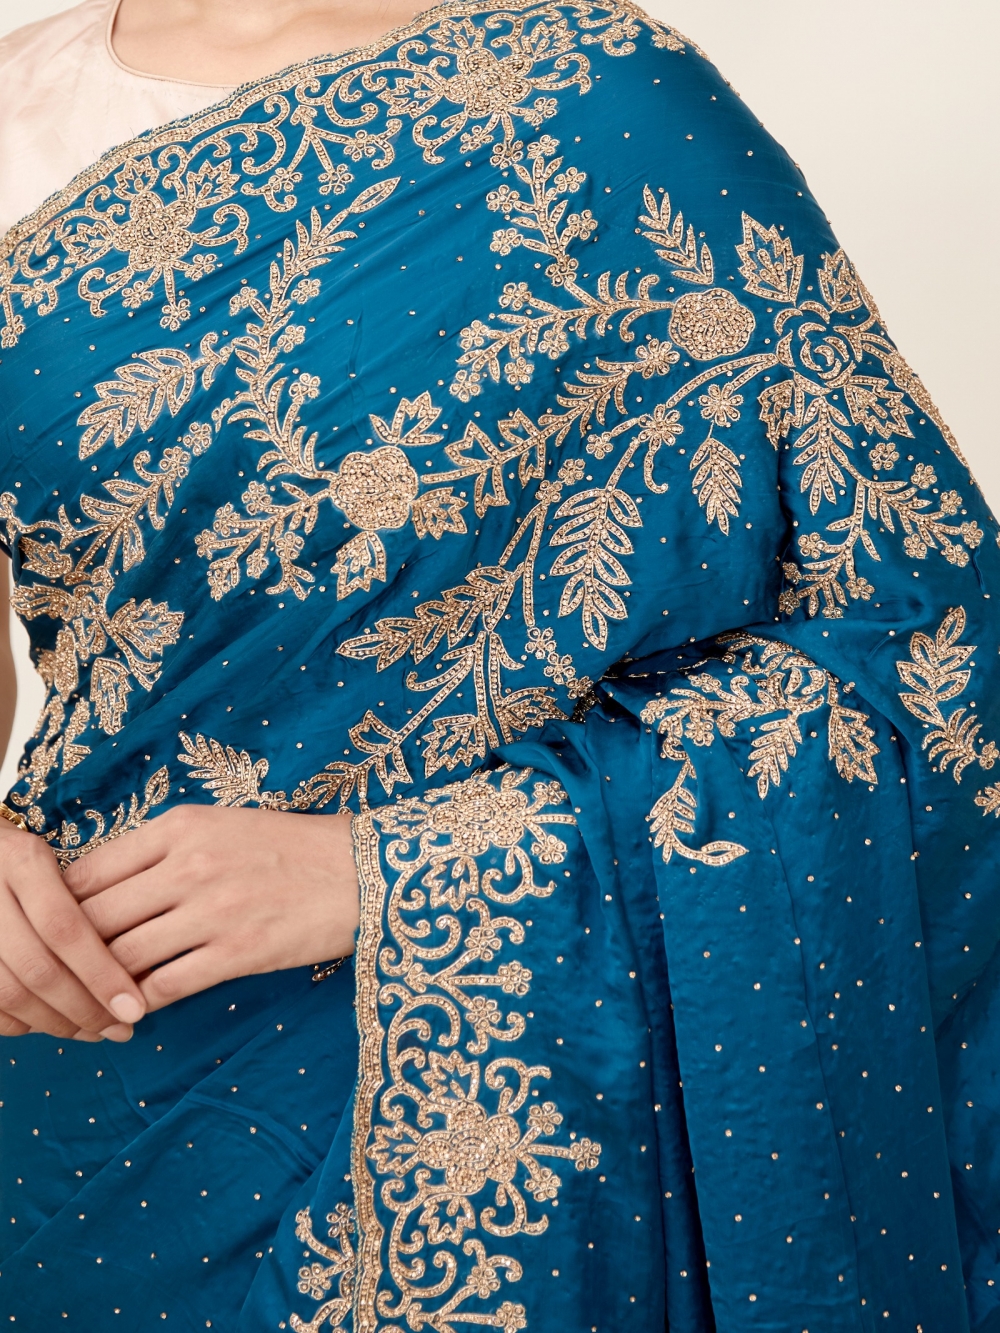 Buy Prussian Blue Satin Saree For Women Online - Frontierraas